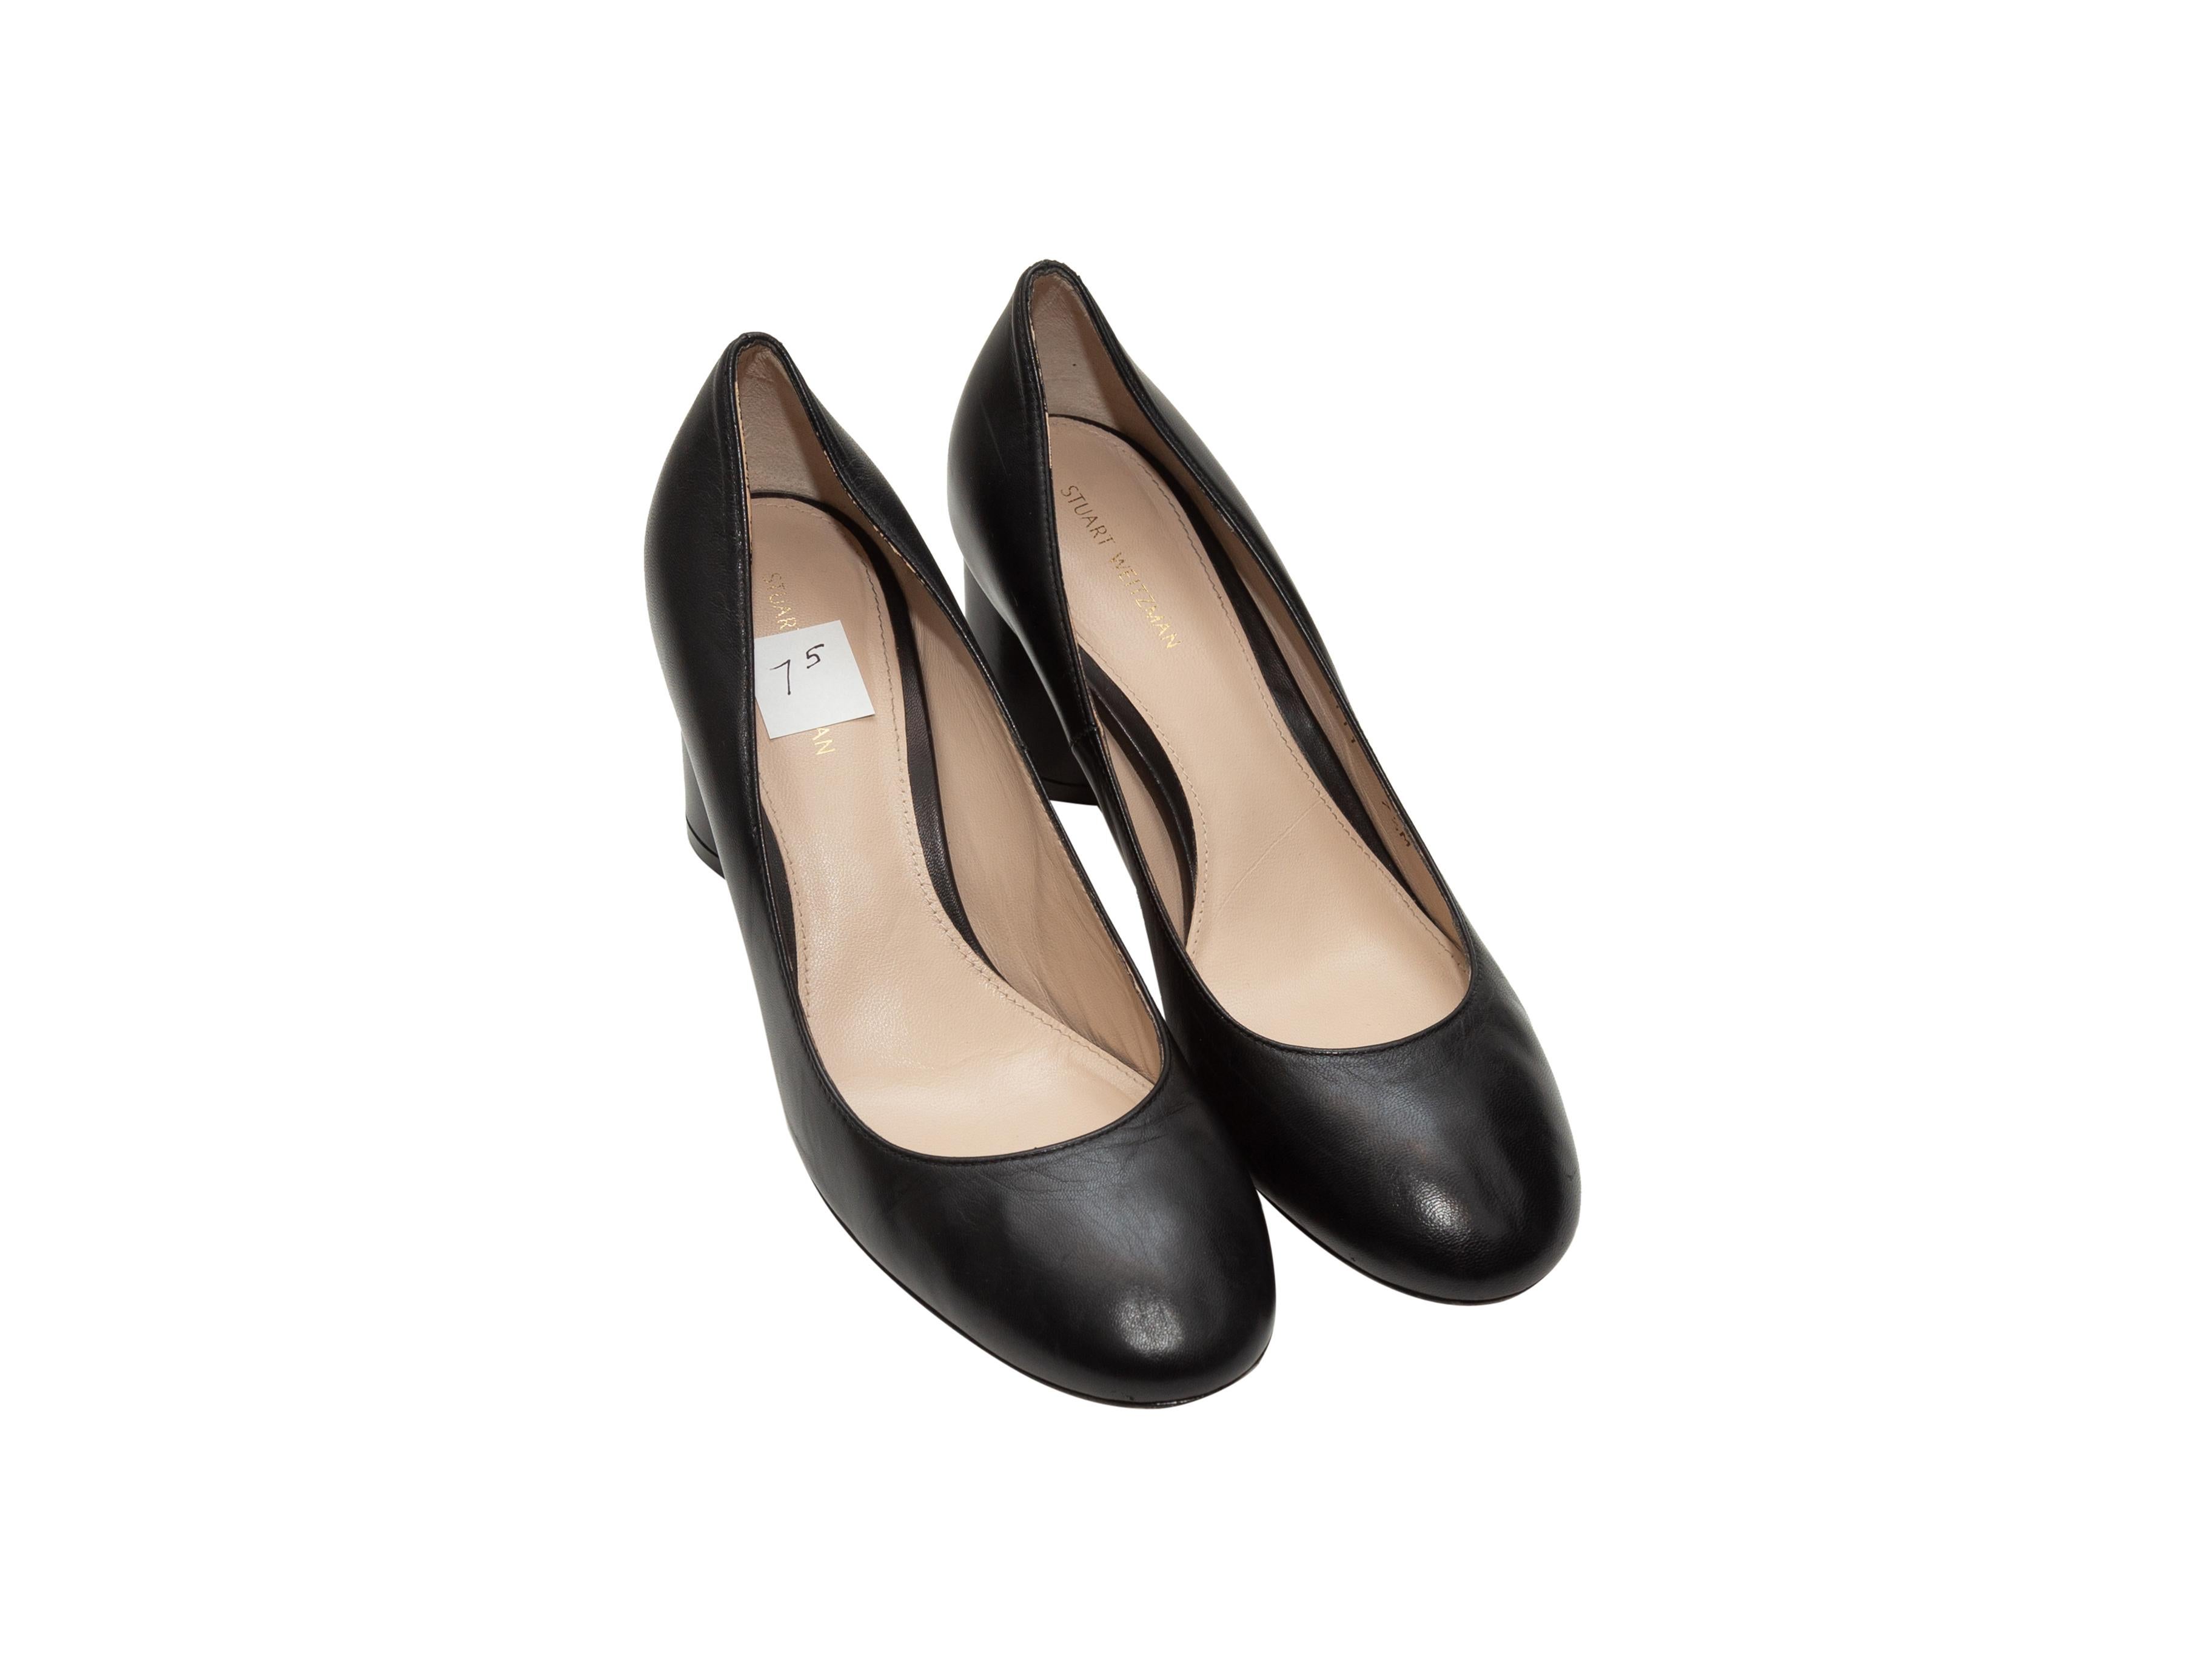 Product details: Black leather round-toe pumps by Stuart Weitzman. Block heels. Designer size 37.5. 2.75